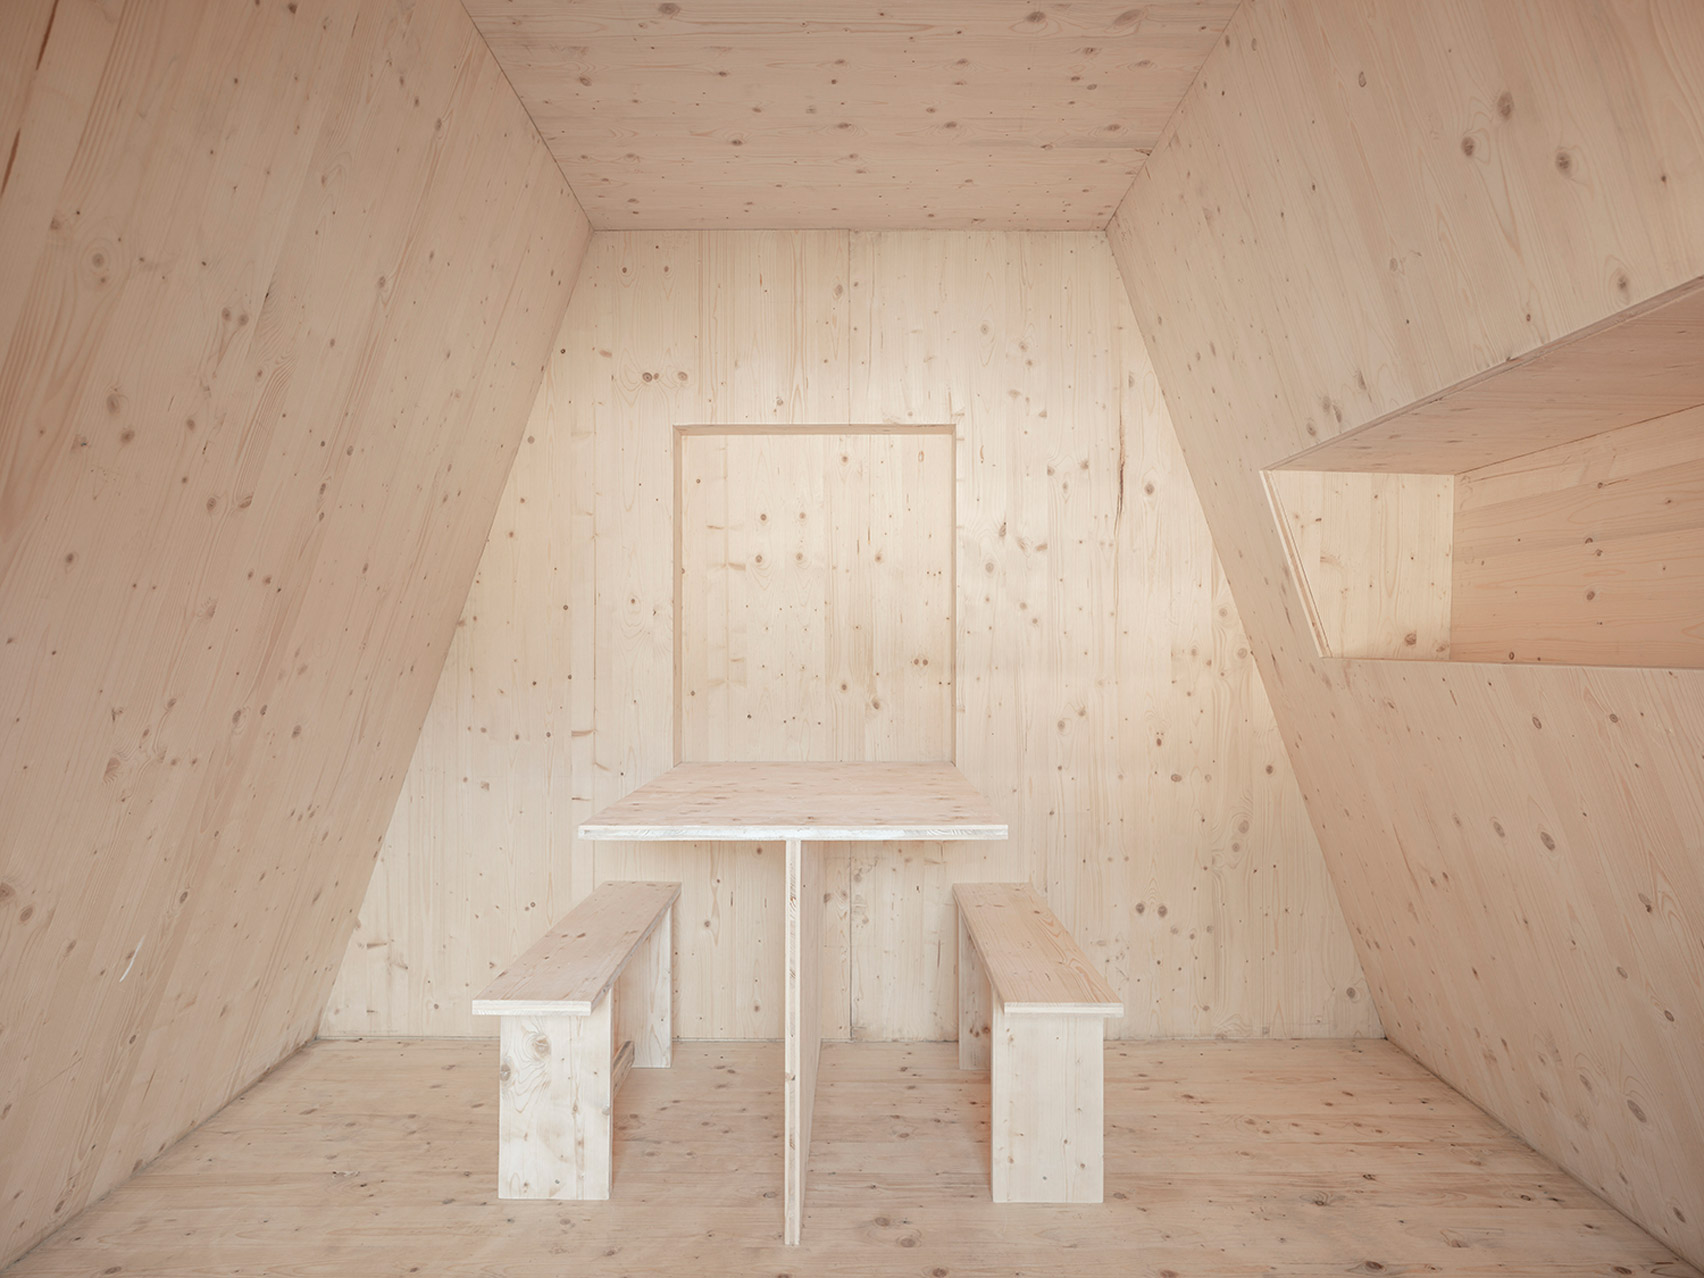 Wood-lined cabin interior designed by Bureau